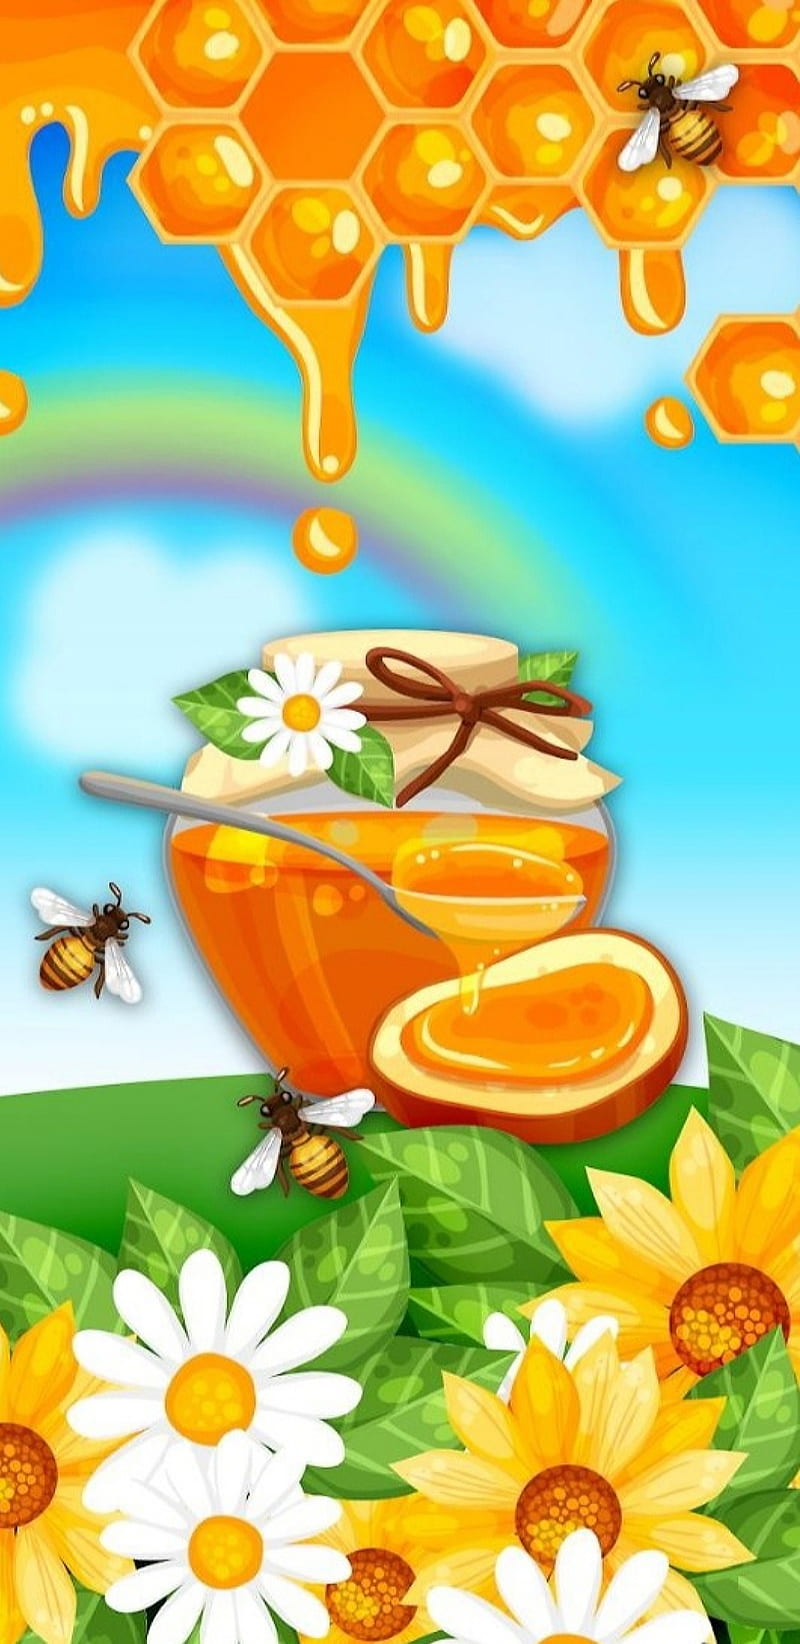 1080p Free Download Honey Pot Bee Cute Floral Flower Honey Pretty Hd Phone Wallpaper 